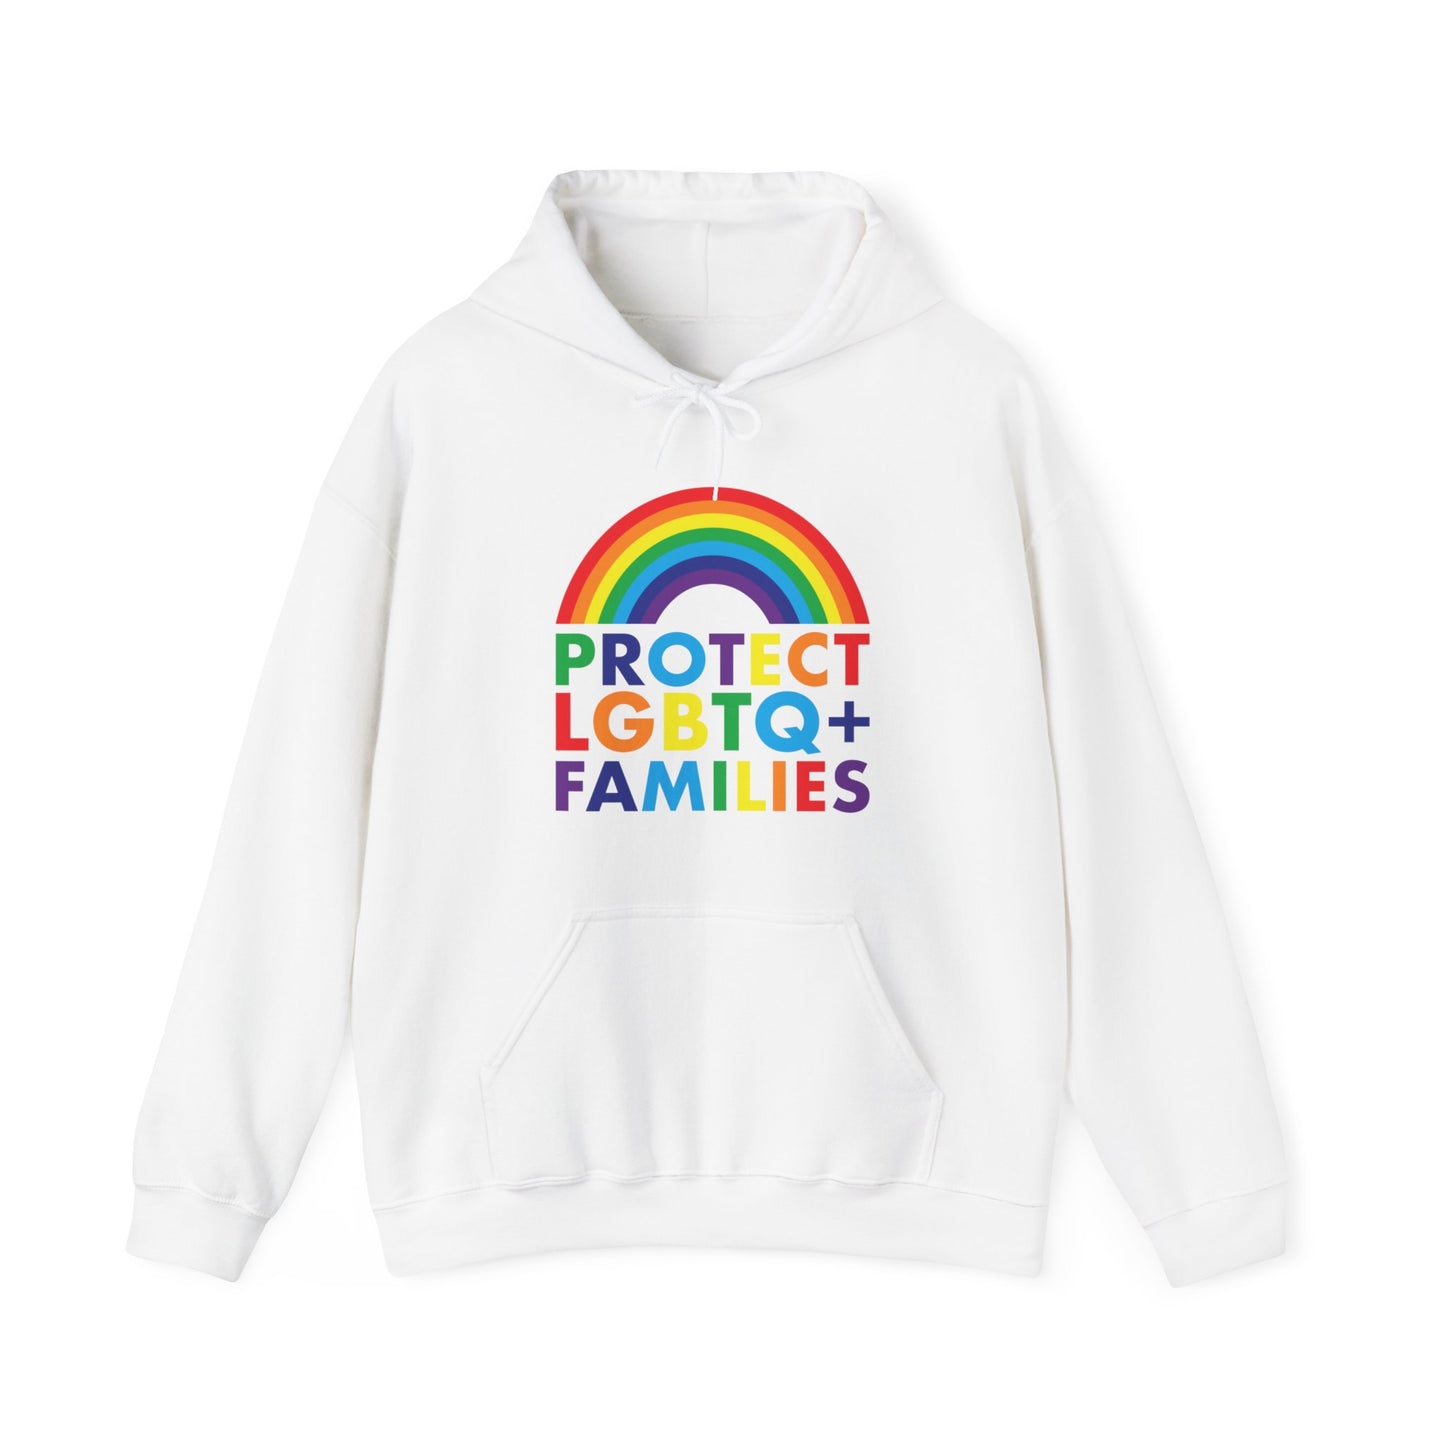 Protect LGBTQ+ Families Hoodie